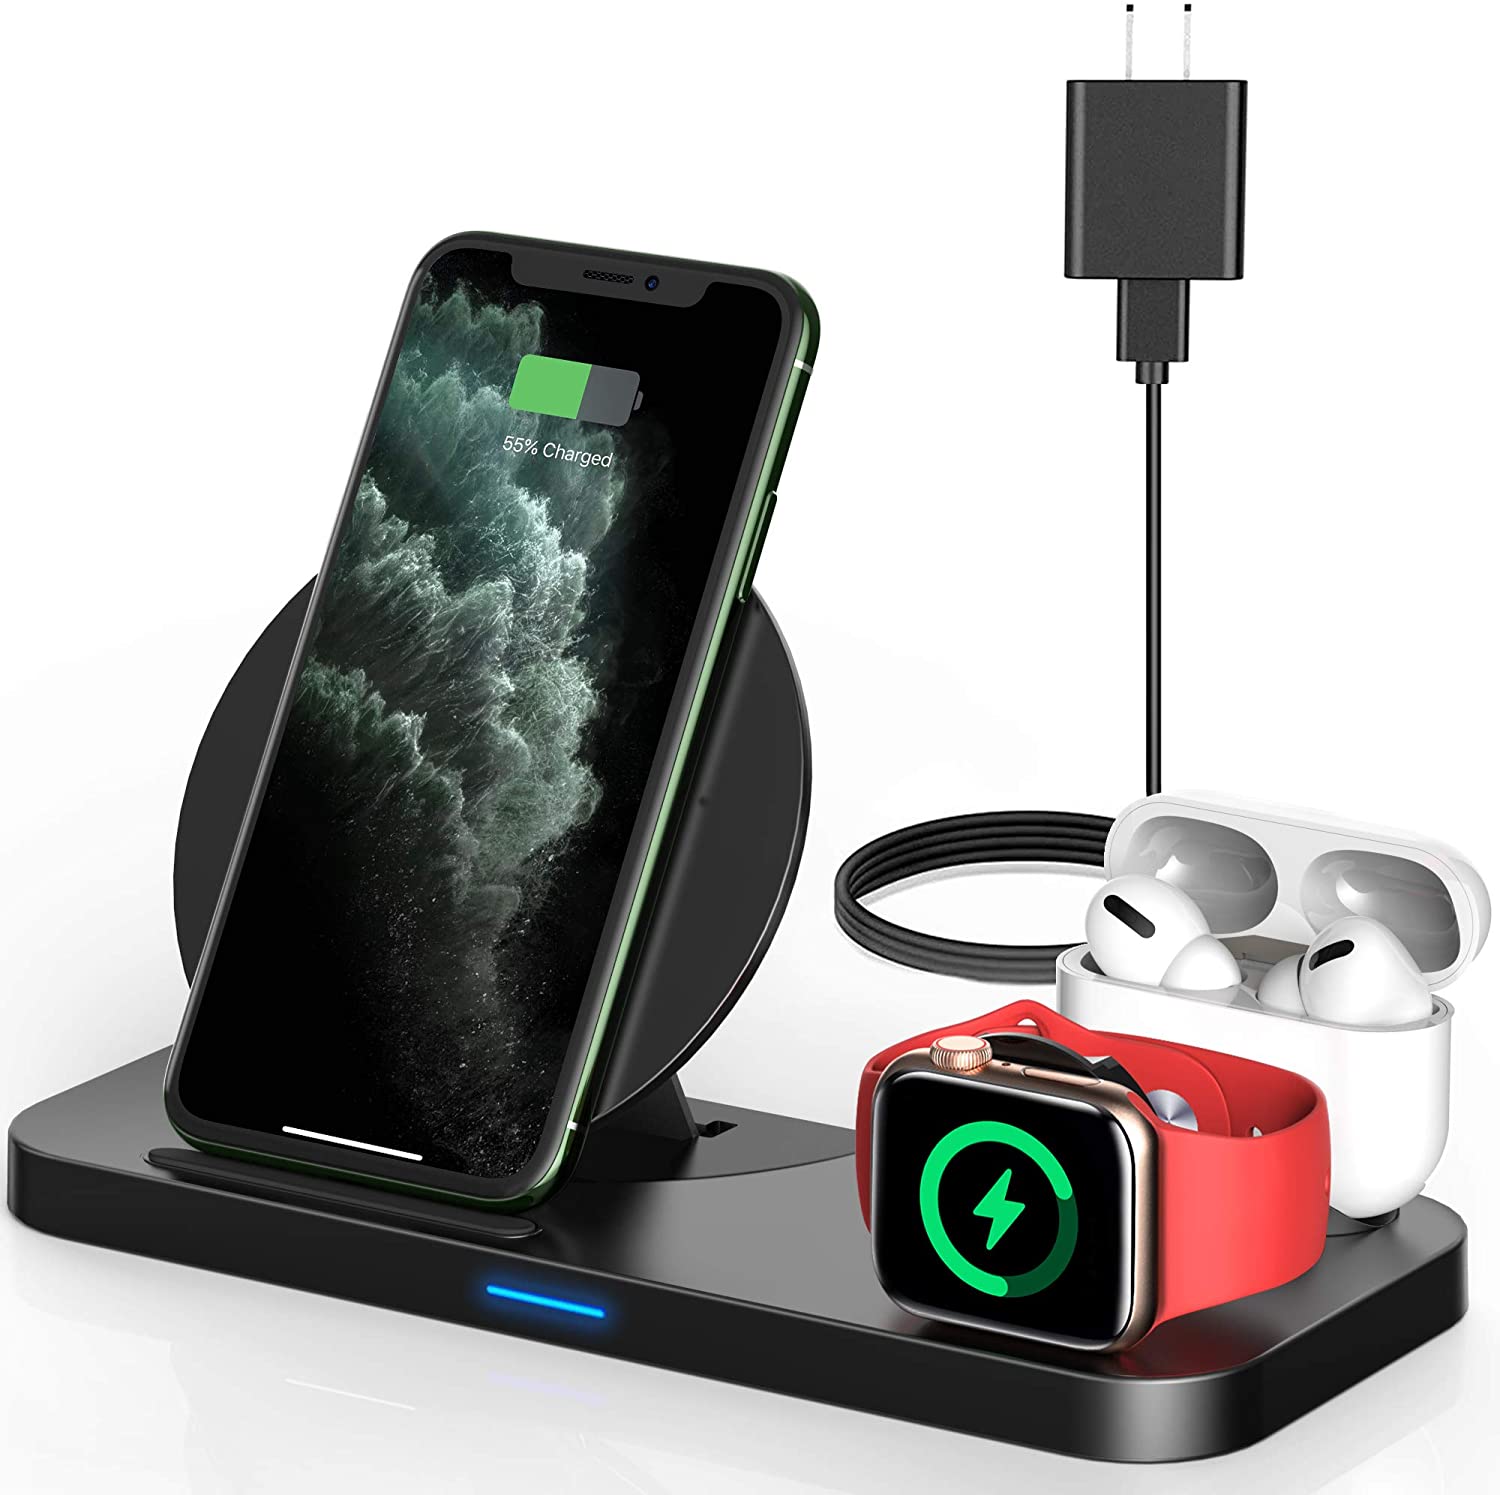 Powlaken portable apple charging station amazon